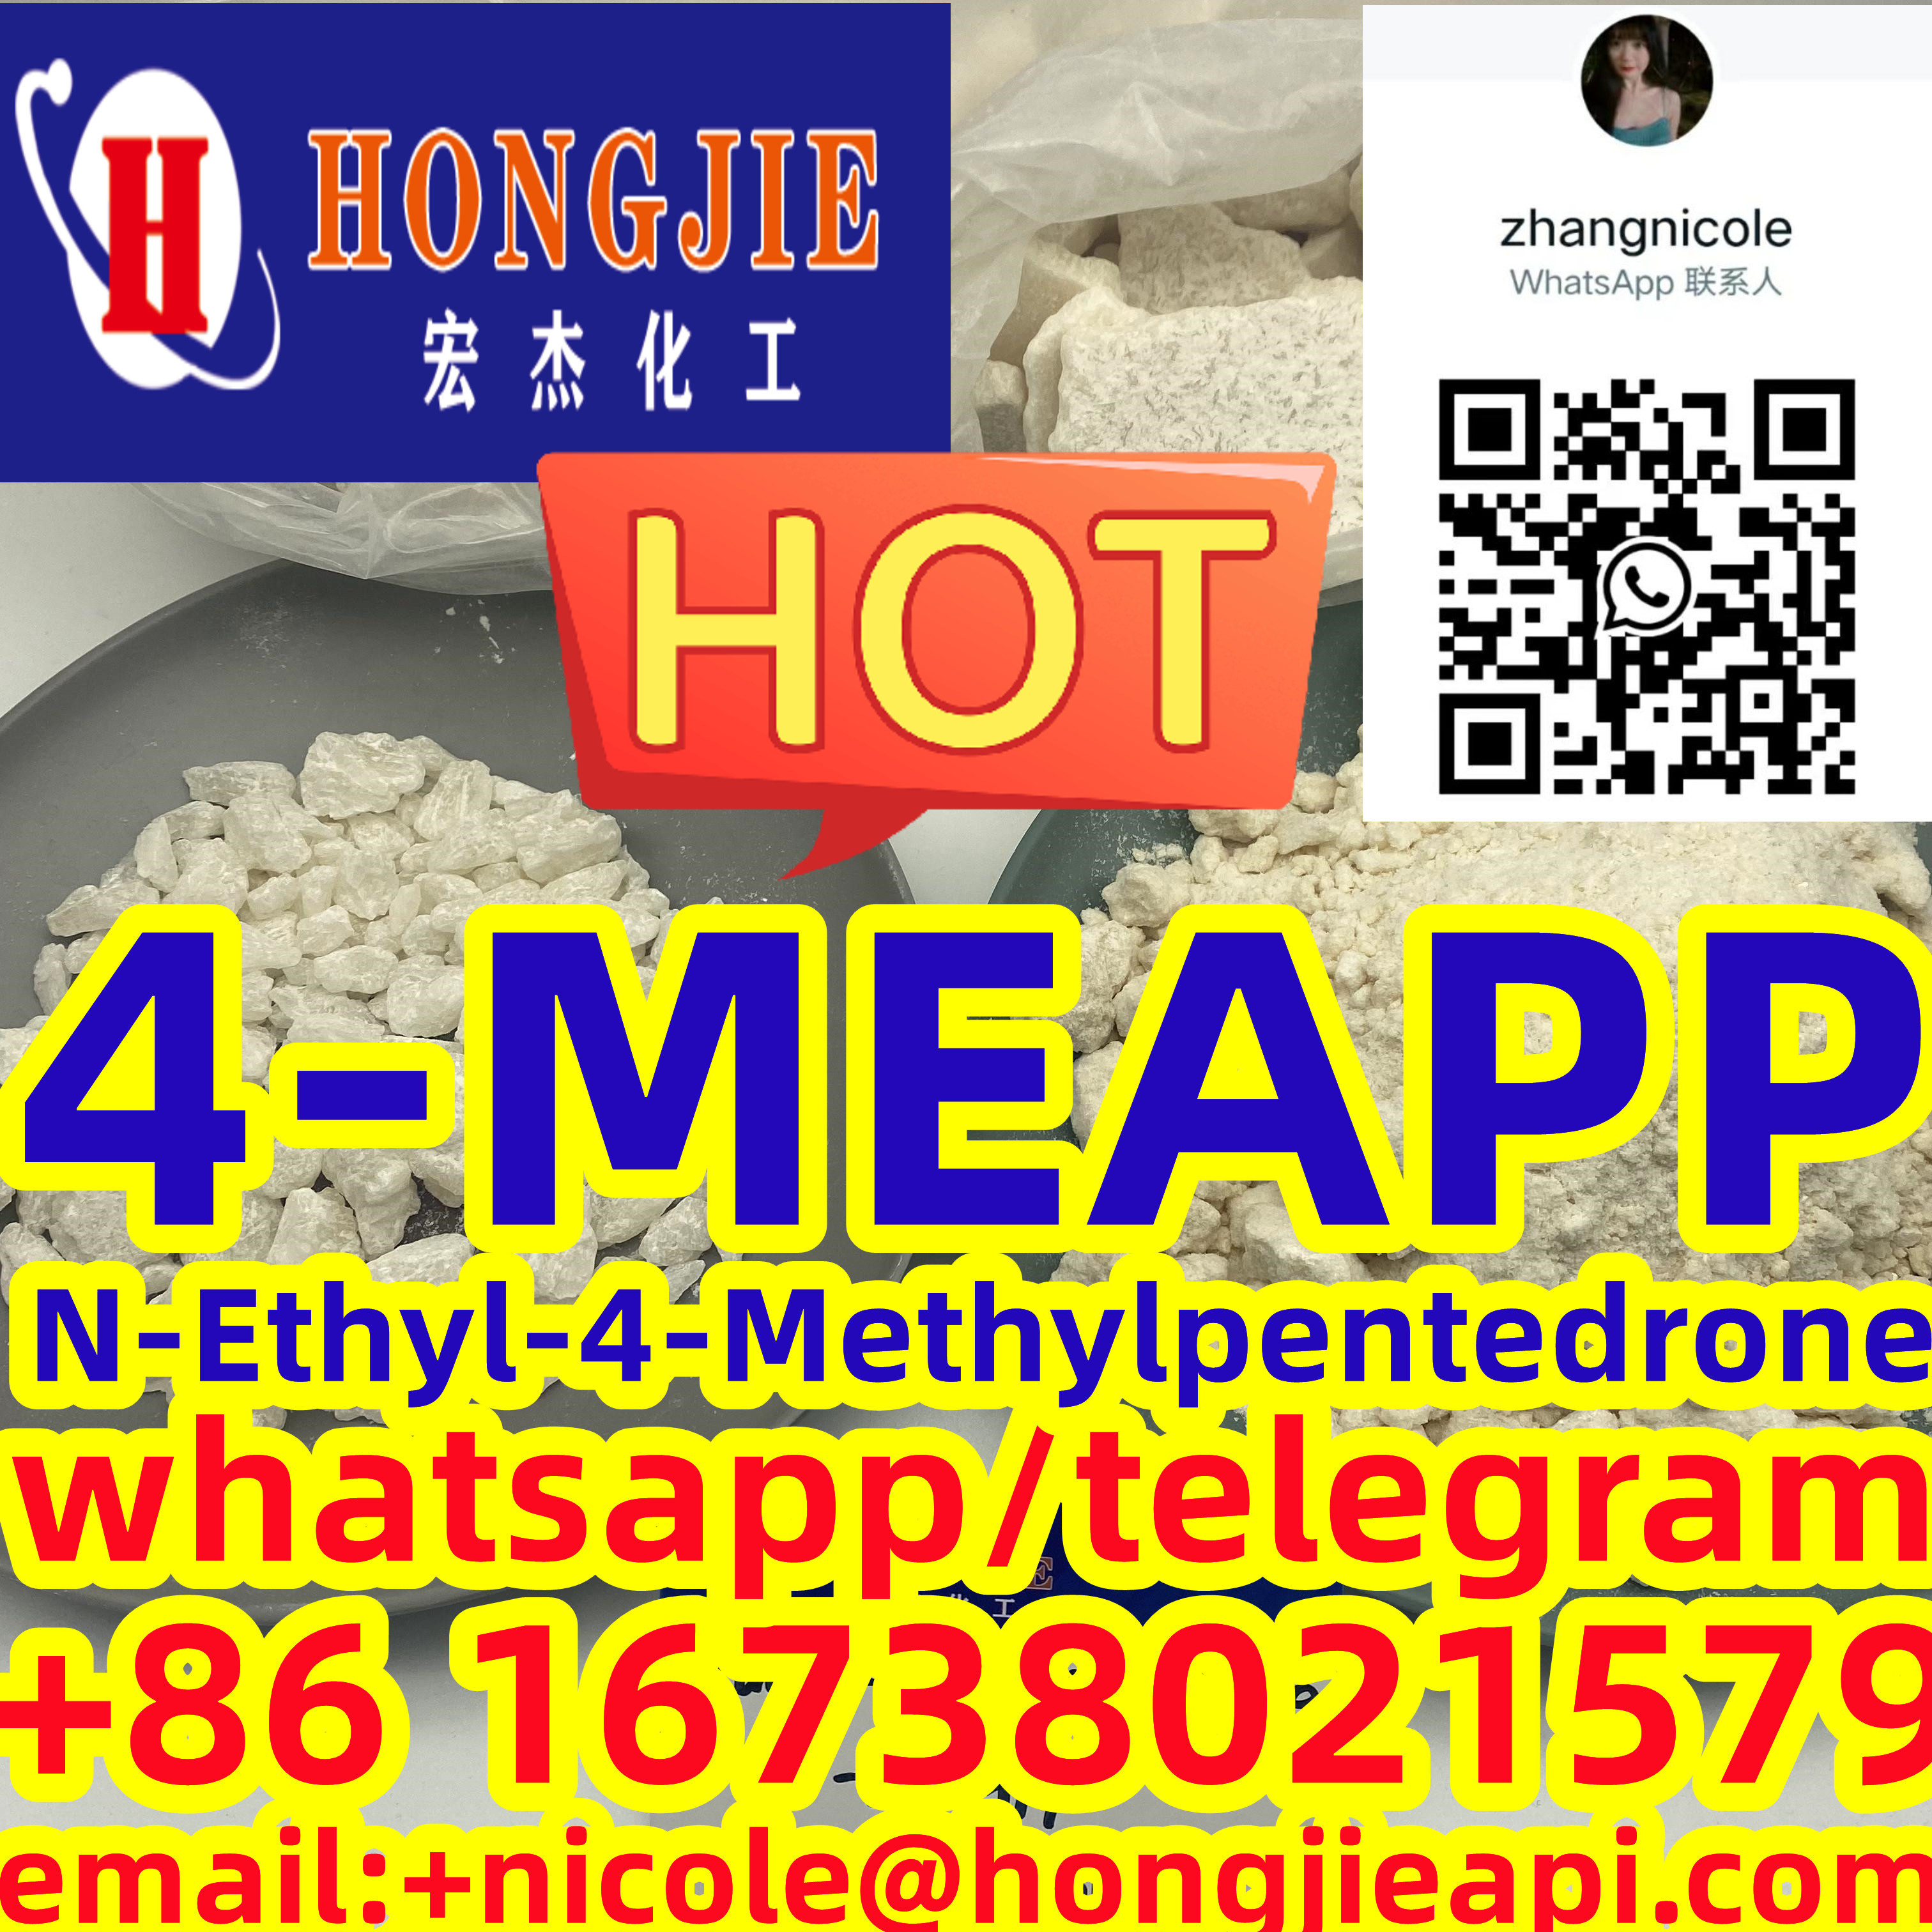 High quality 4-MEAPP N-Ethyl-4-Methylpentedrone